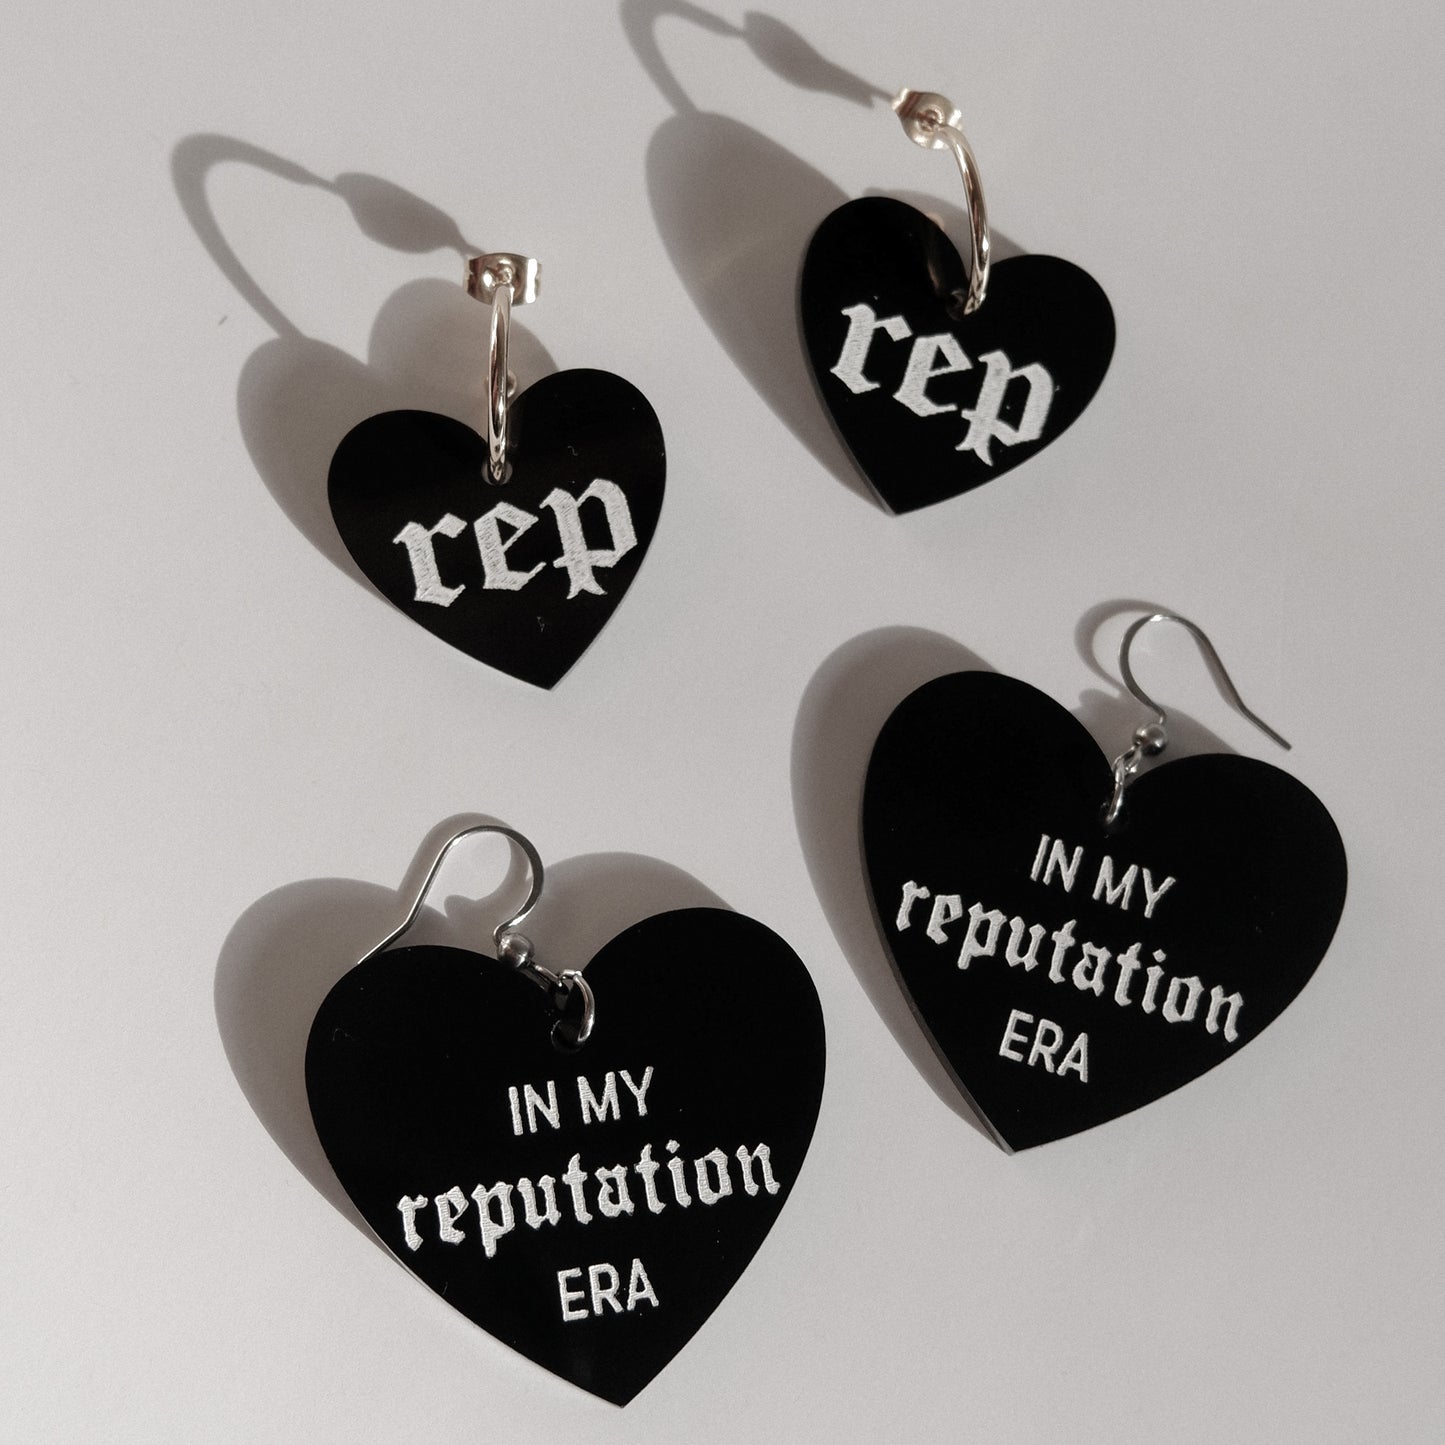 mini rep hearts - taylor swift earrings